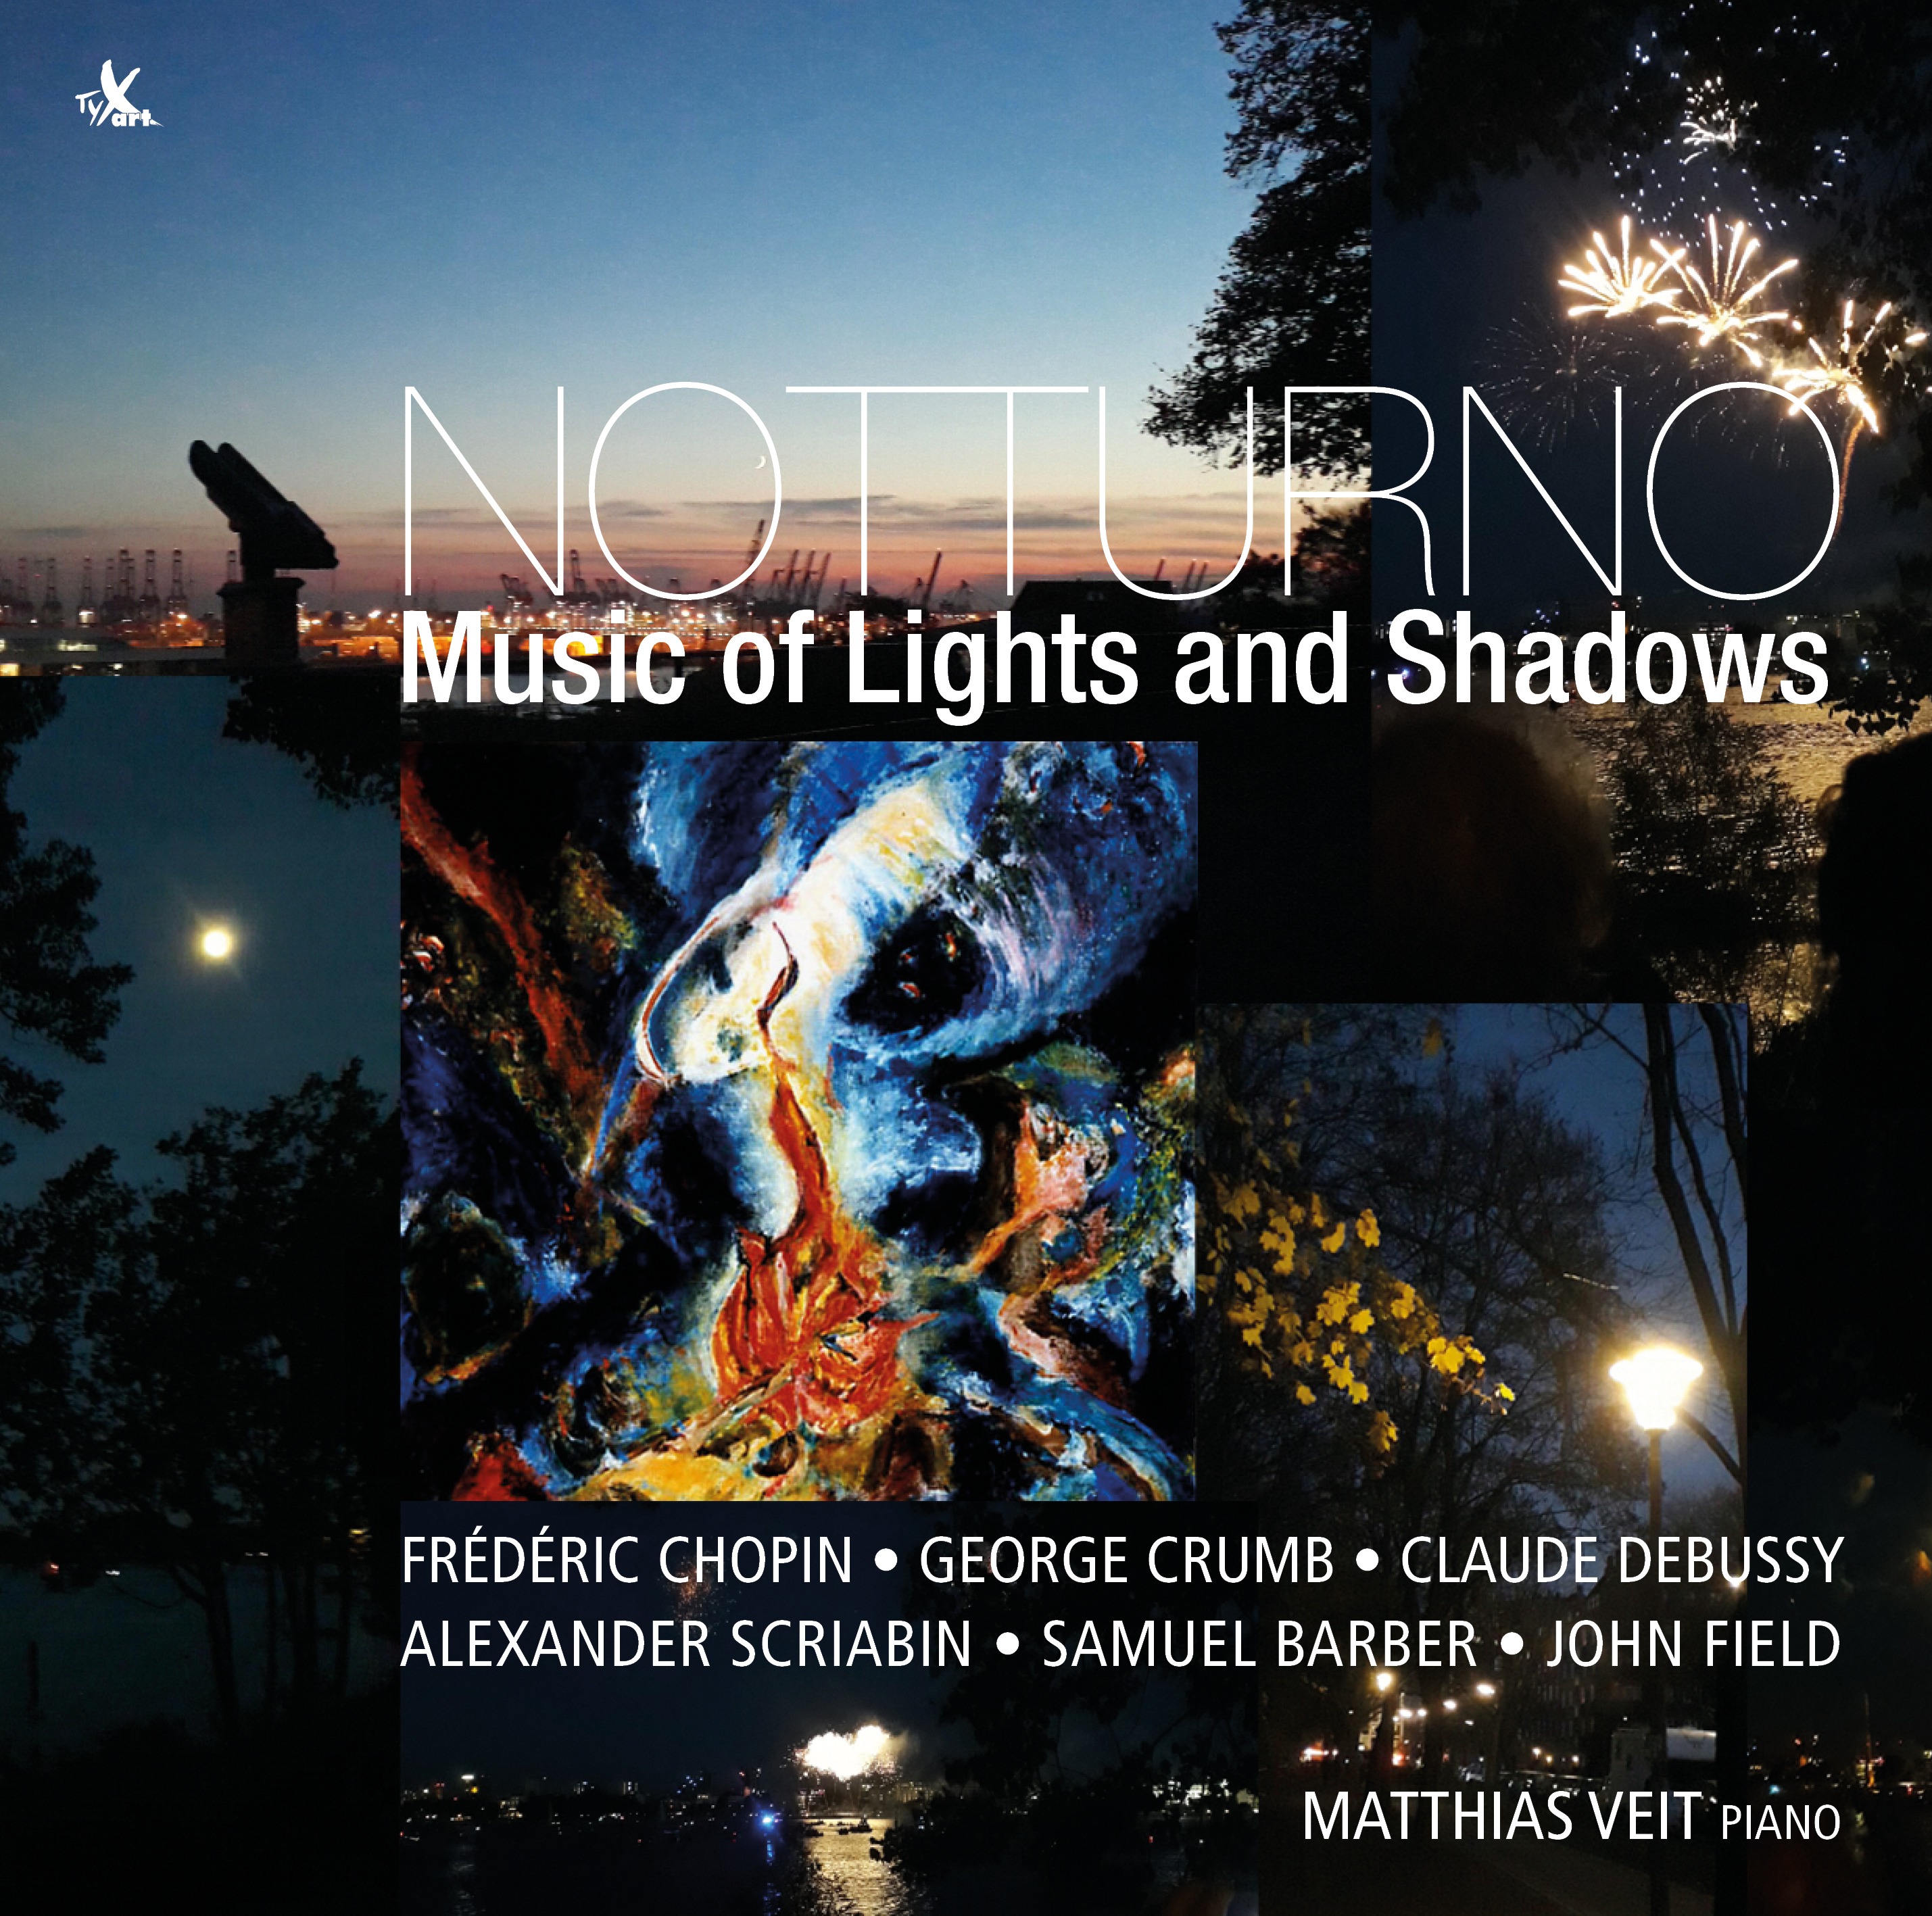 Notturno - Music of Lights and Shadows - Matthias Veit